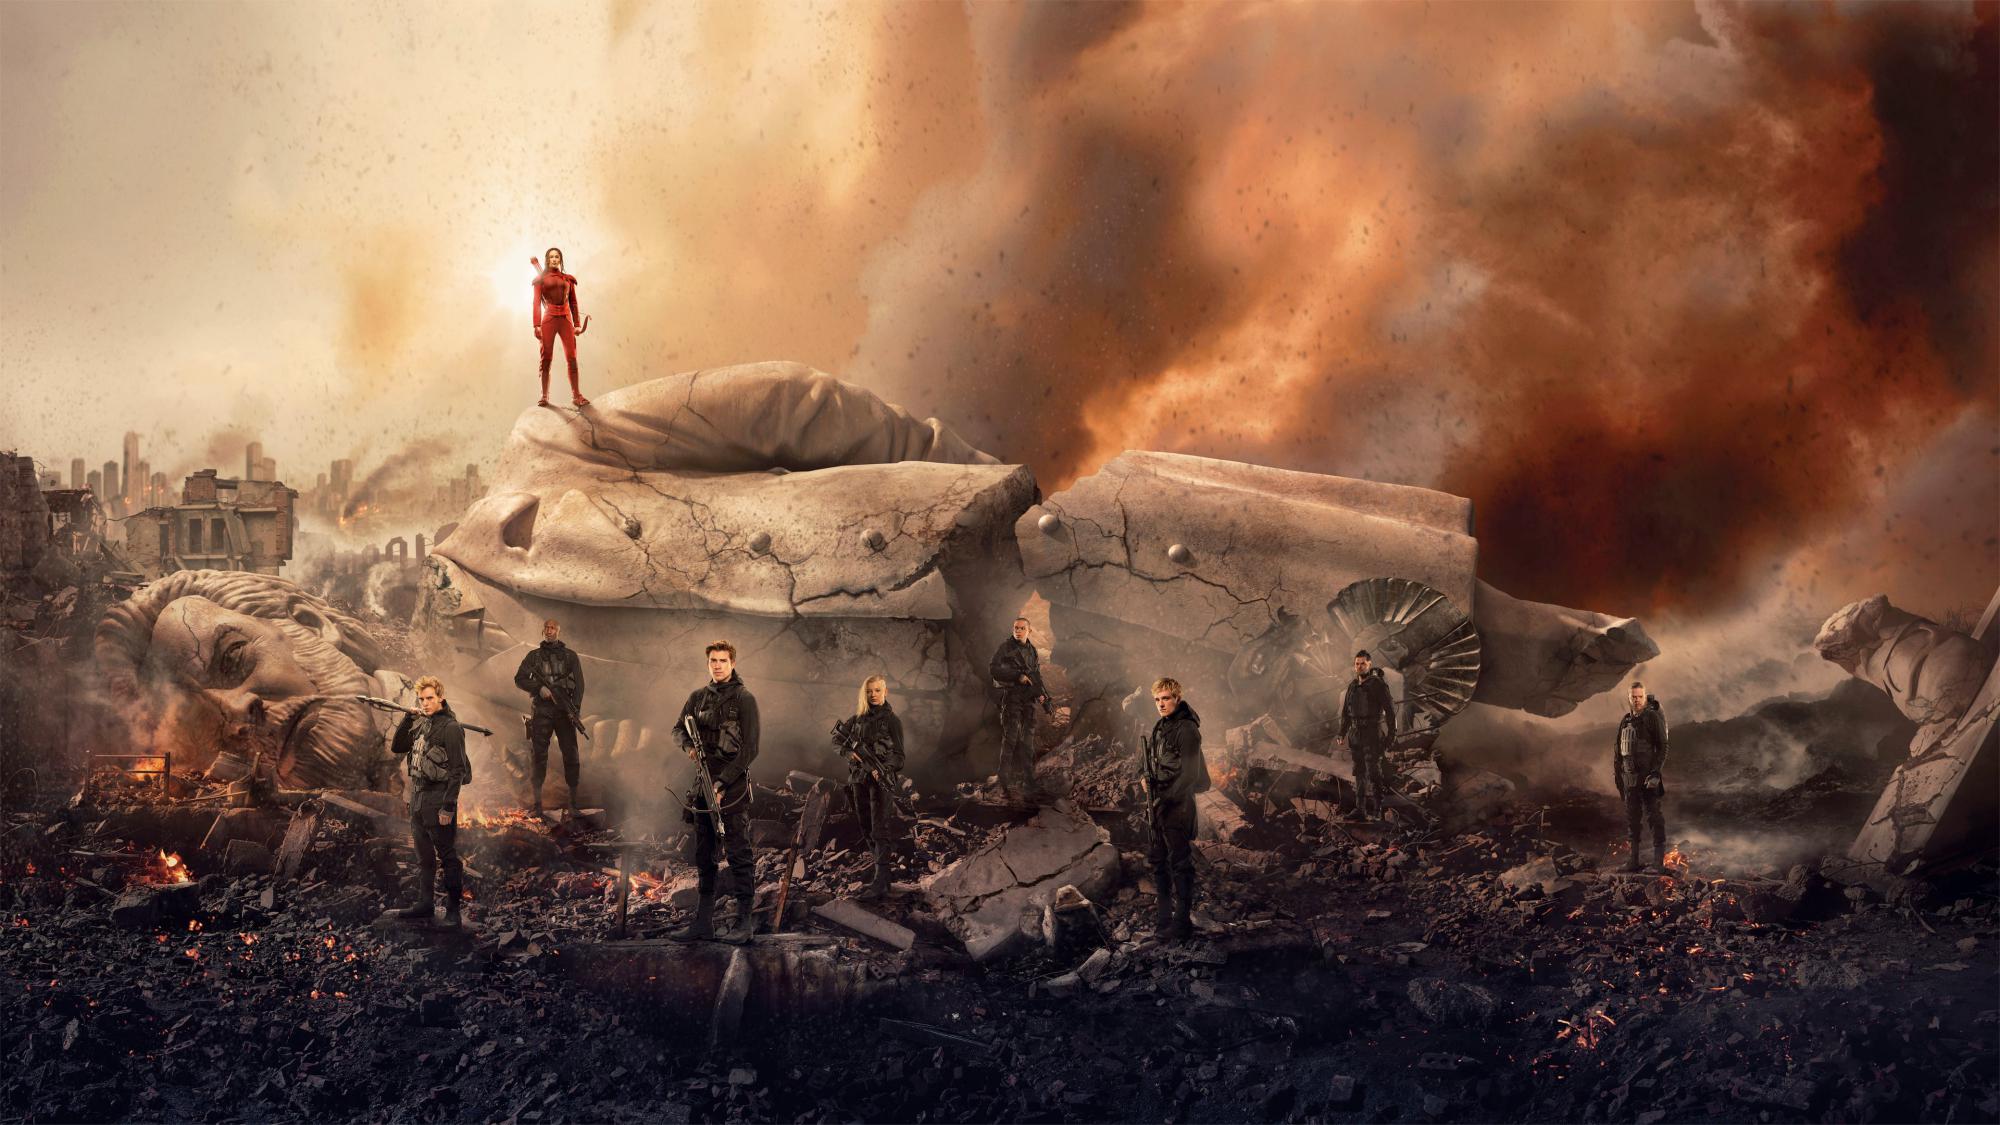 Backdrop Image for The Hunger Games: Mockingjay Part 2